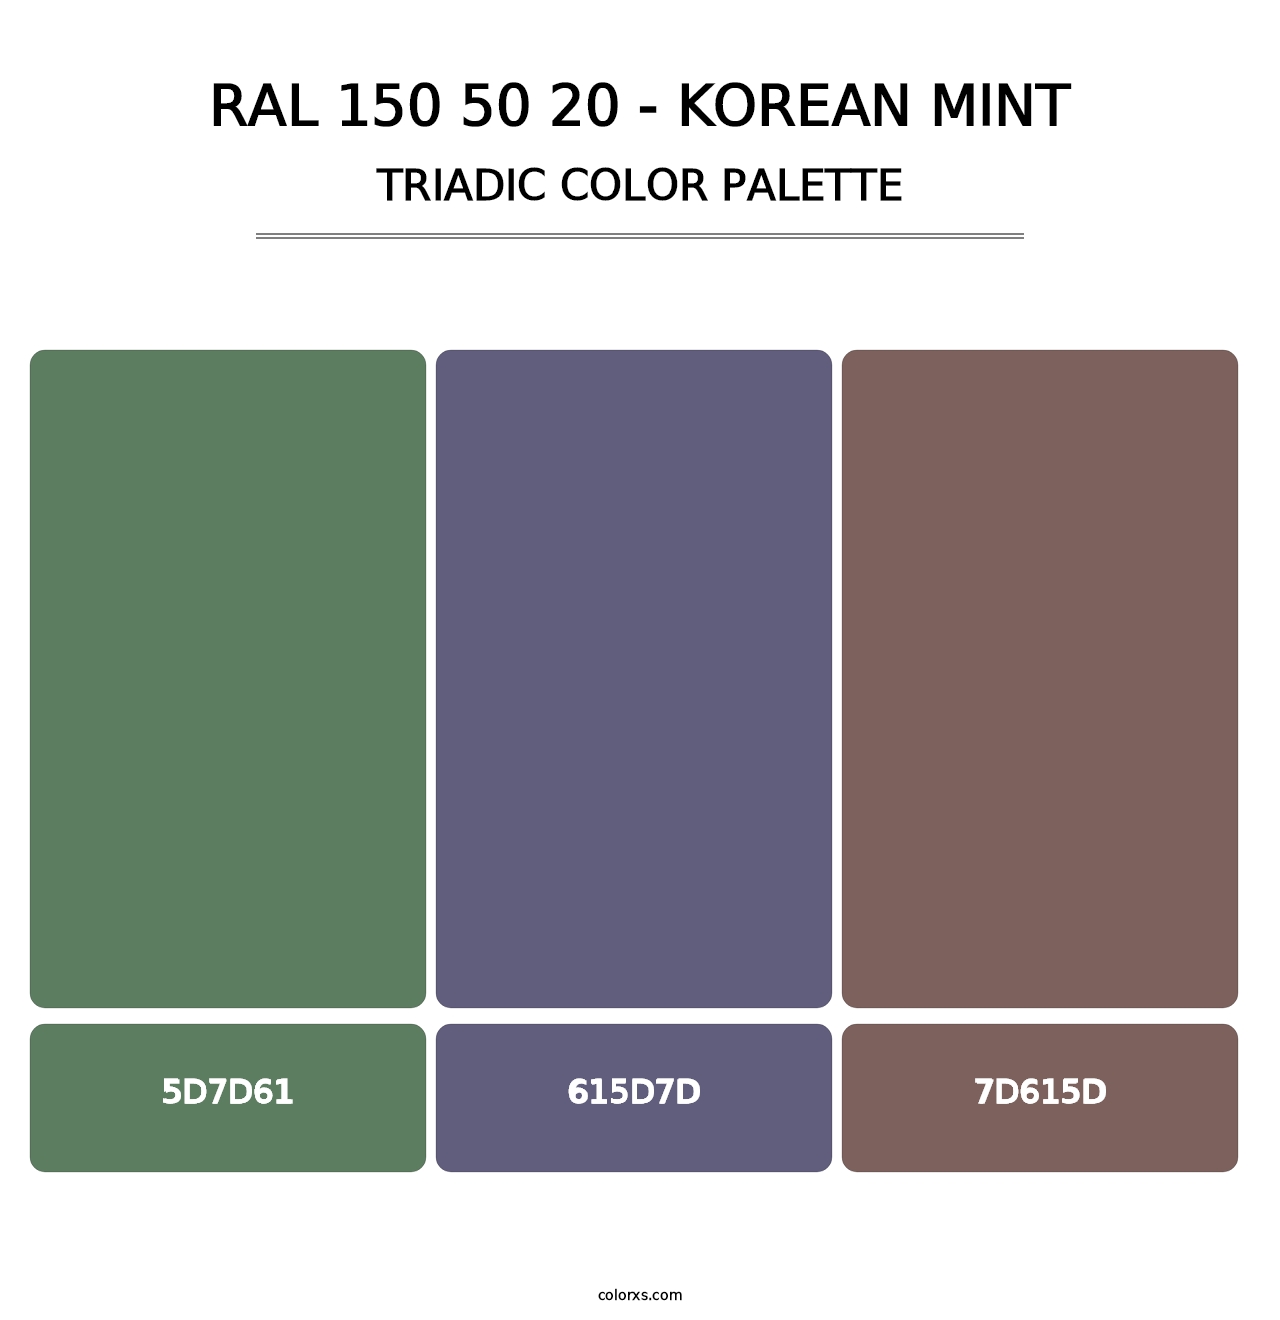 RAL 150 50 20 - Korean Mint - Triadic Color Palette